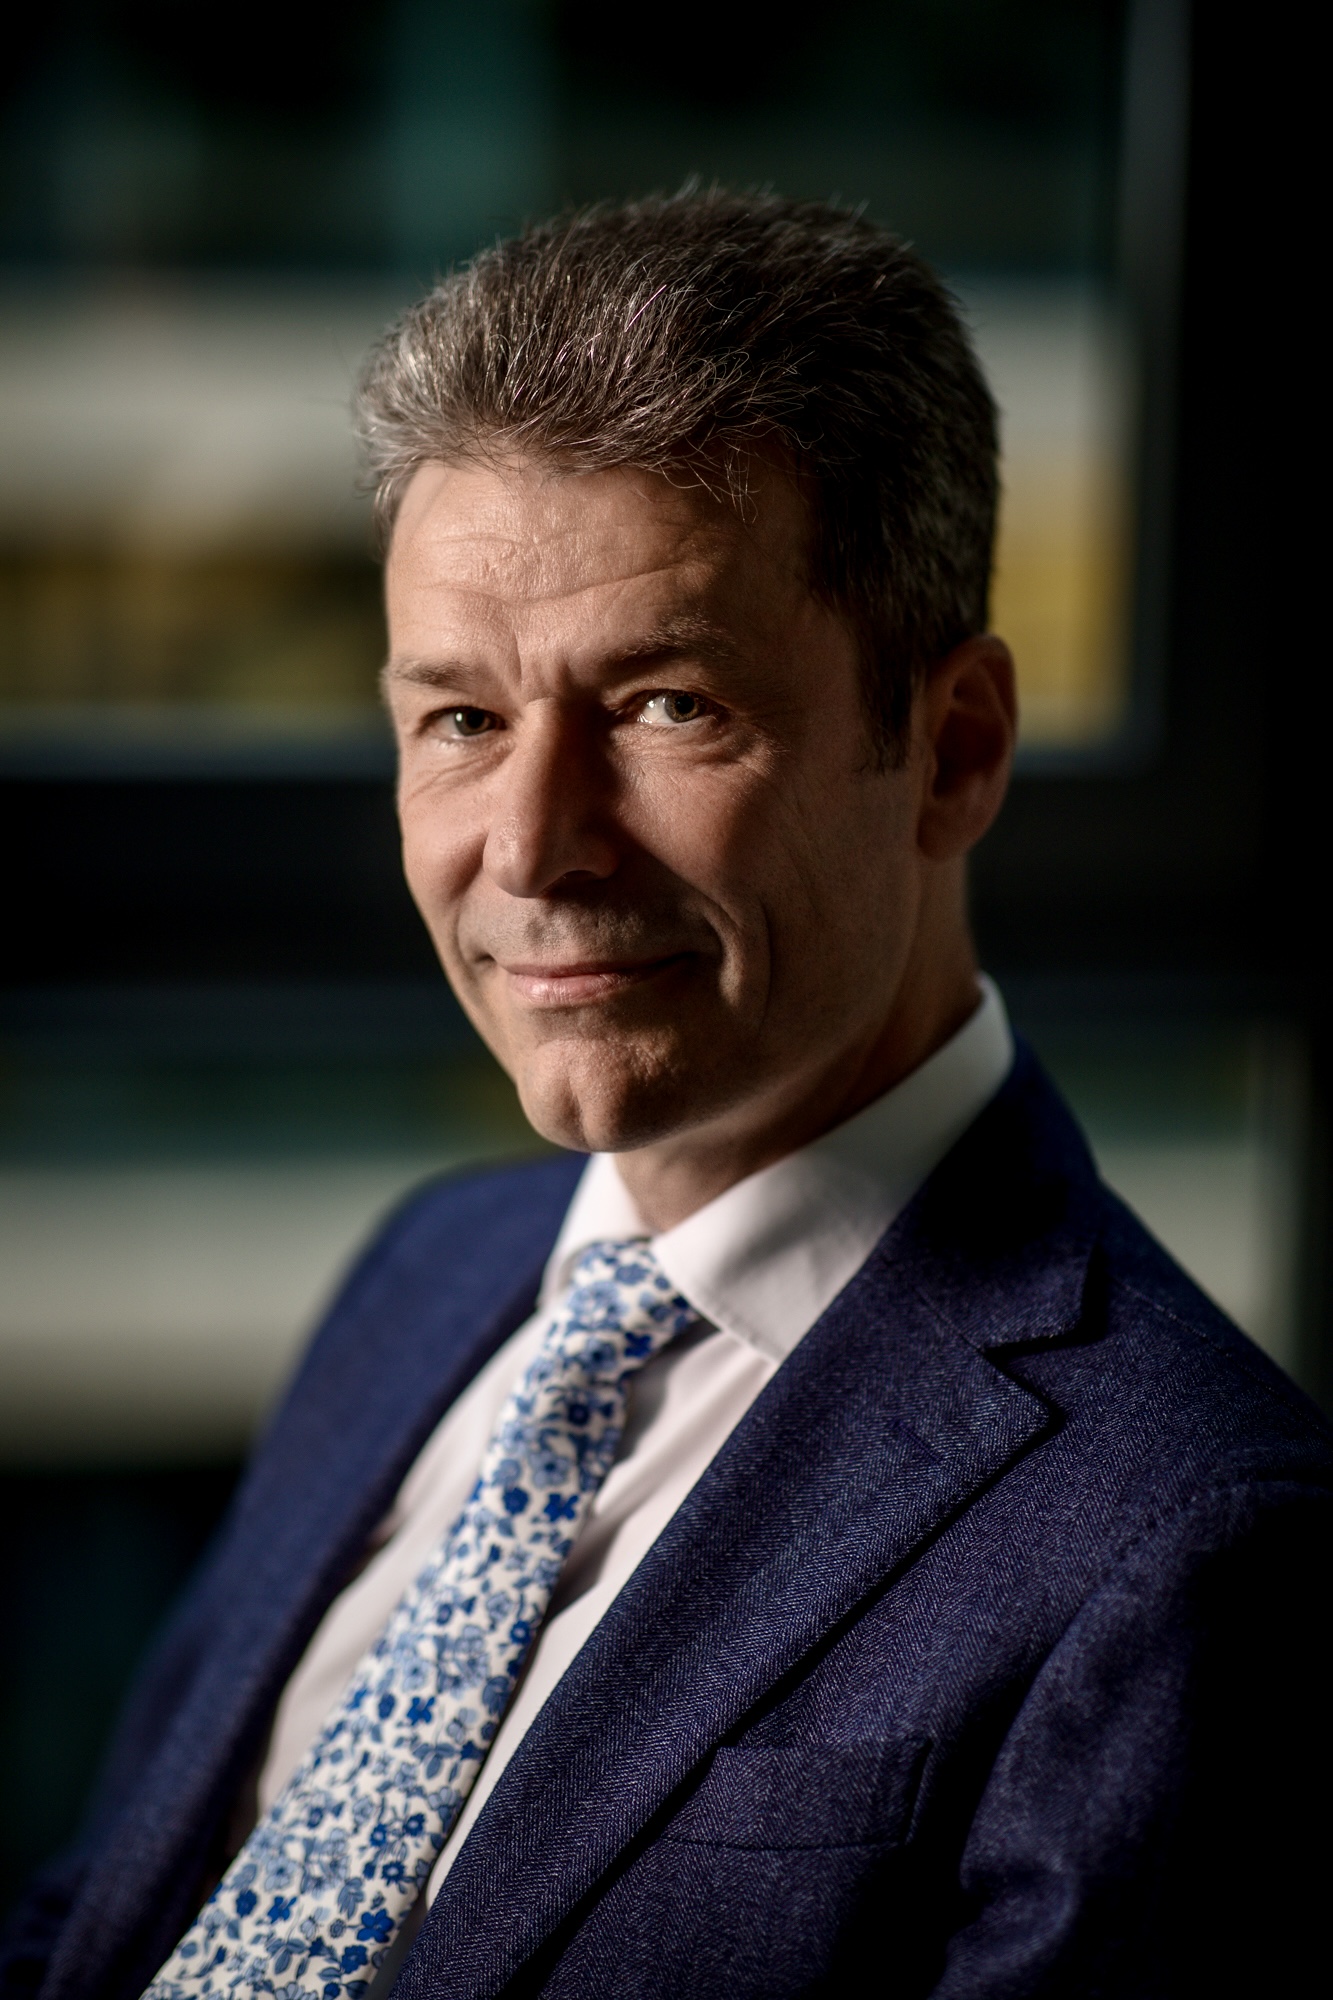 Interview Two: Péter Noszek, CEO, Nestlé Hungary